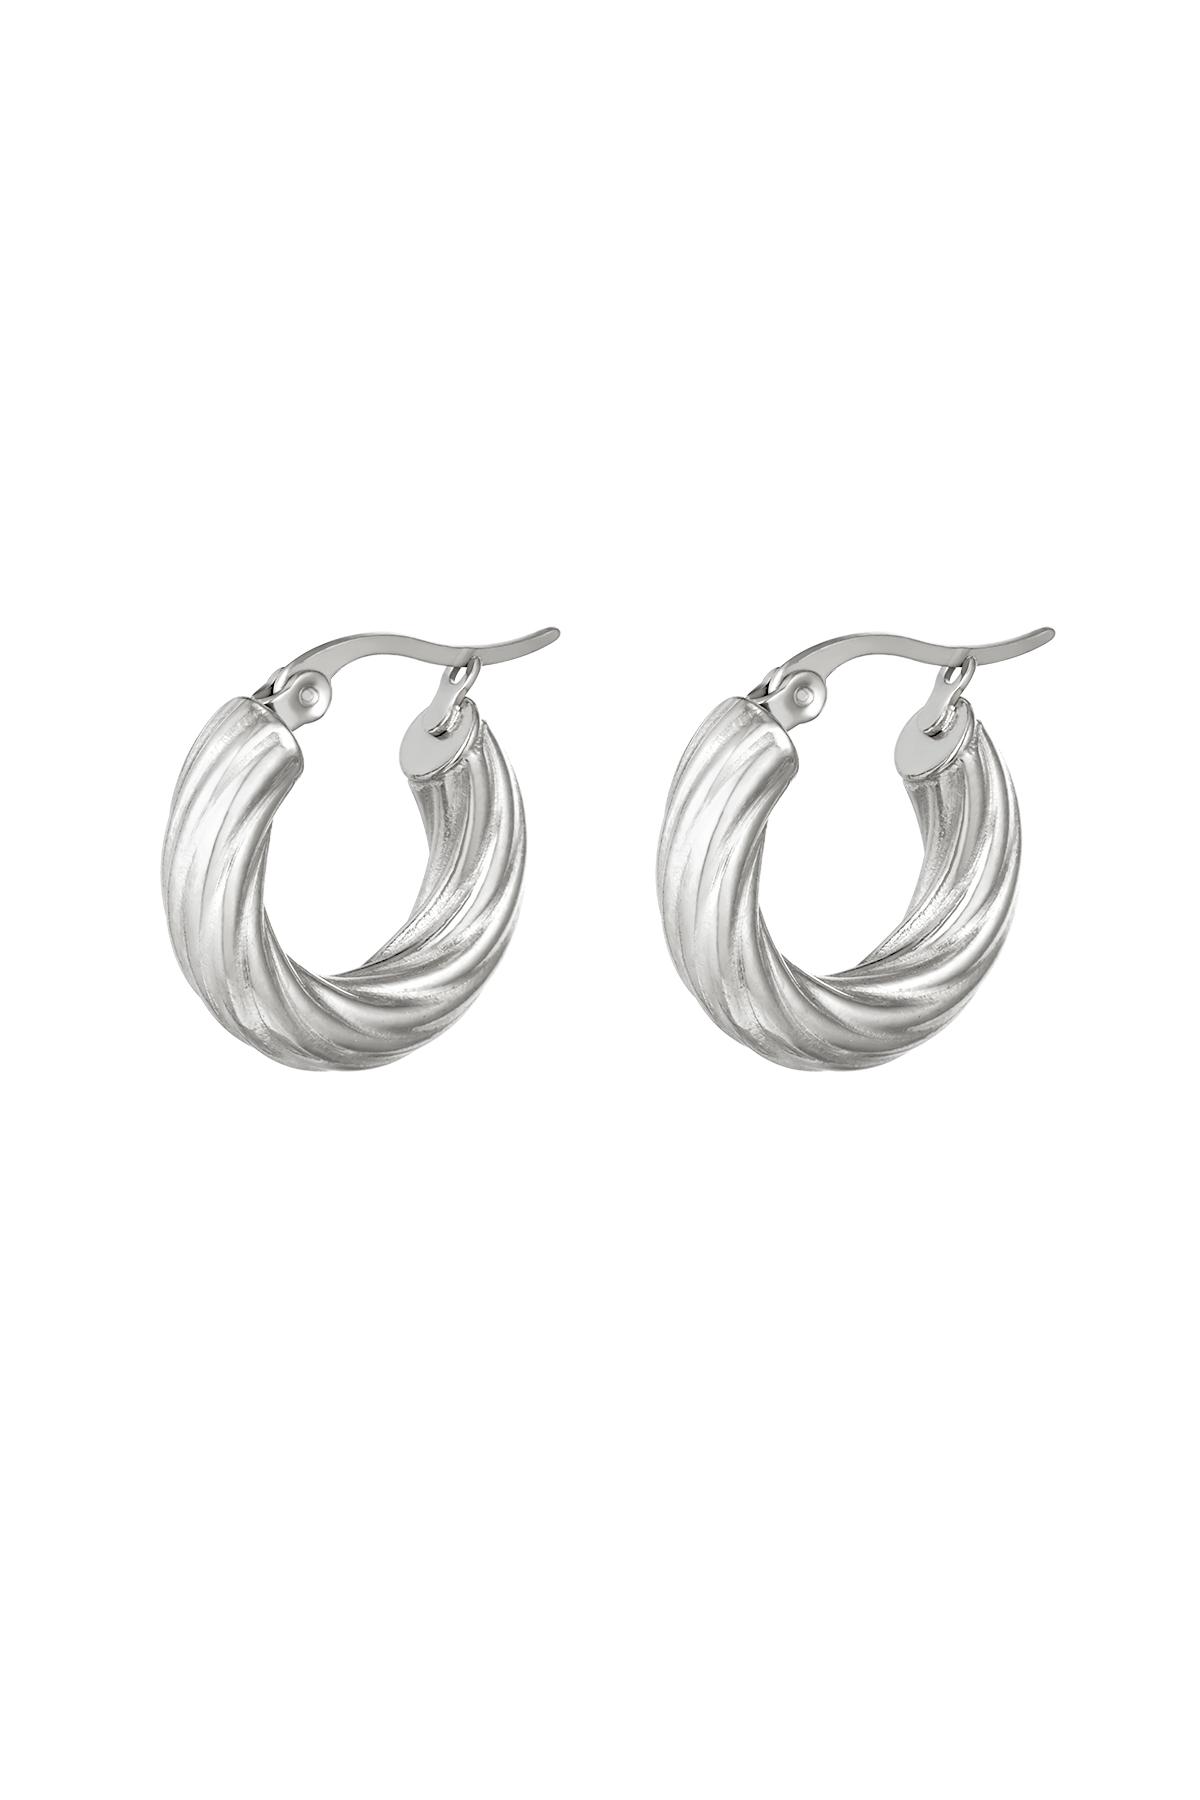 Silver / Earrings Curly Hoops Silver Stainless Steel 